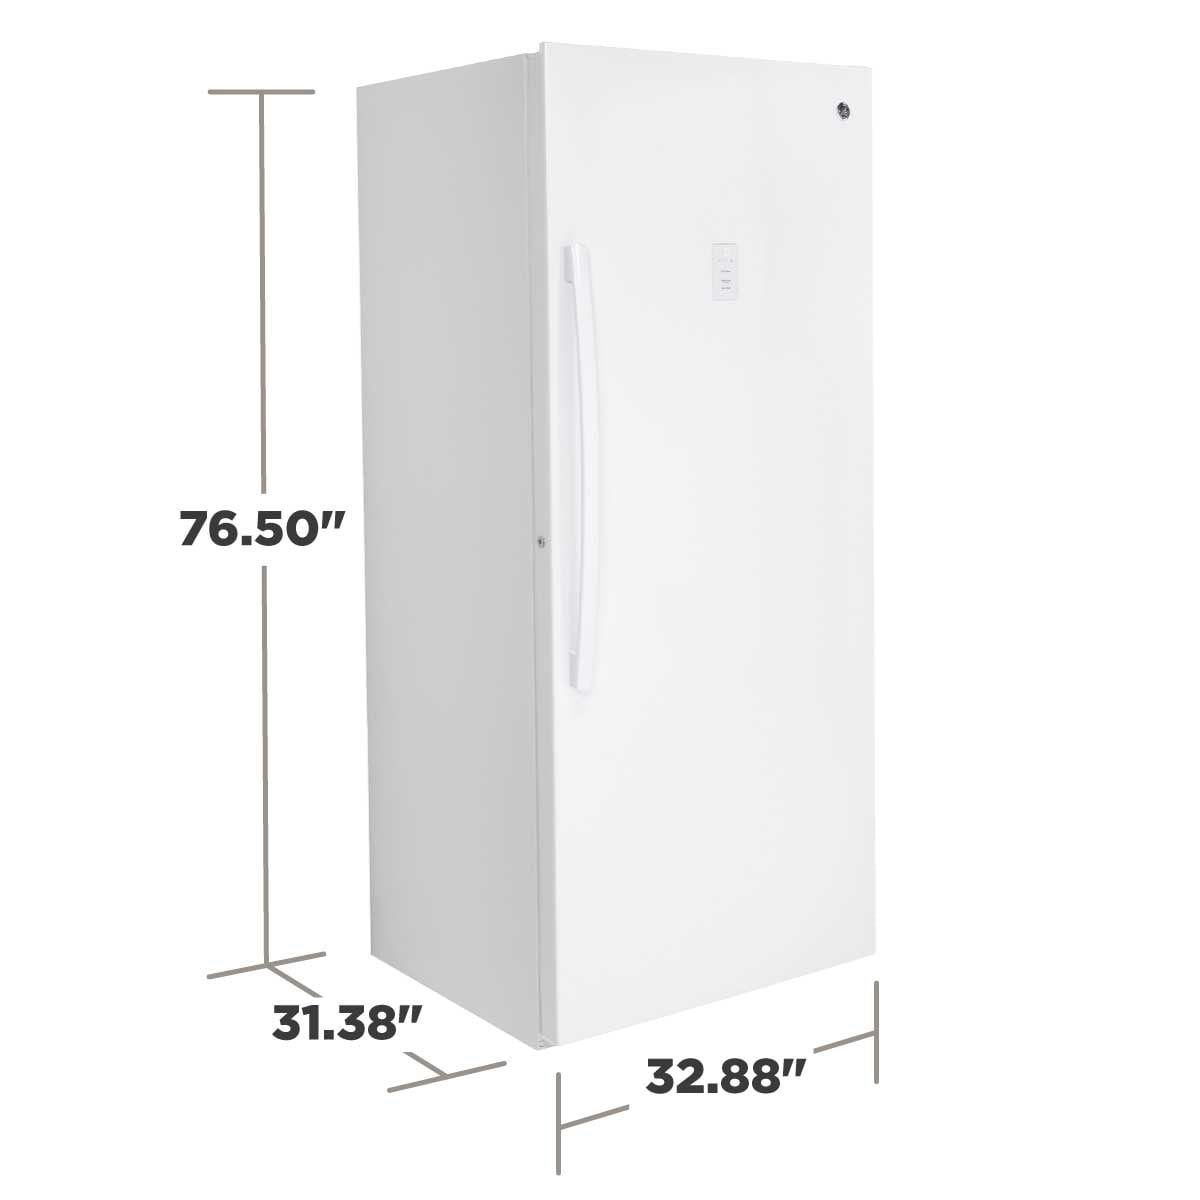 FUF21DLRWW by GE Appliances - GE® ENERGY STAR® 21.3 Cu. Ft. Frost-Free Garage  Ready Upright Freezer